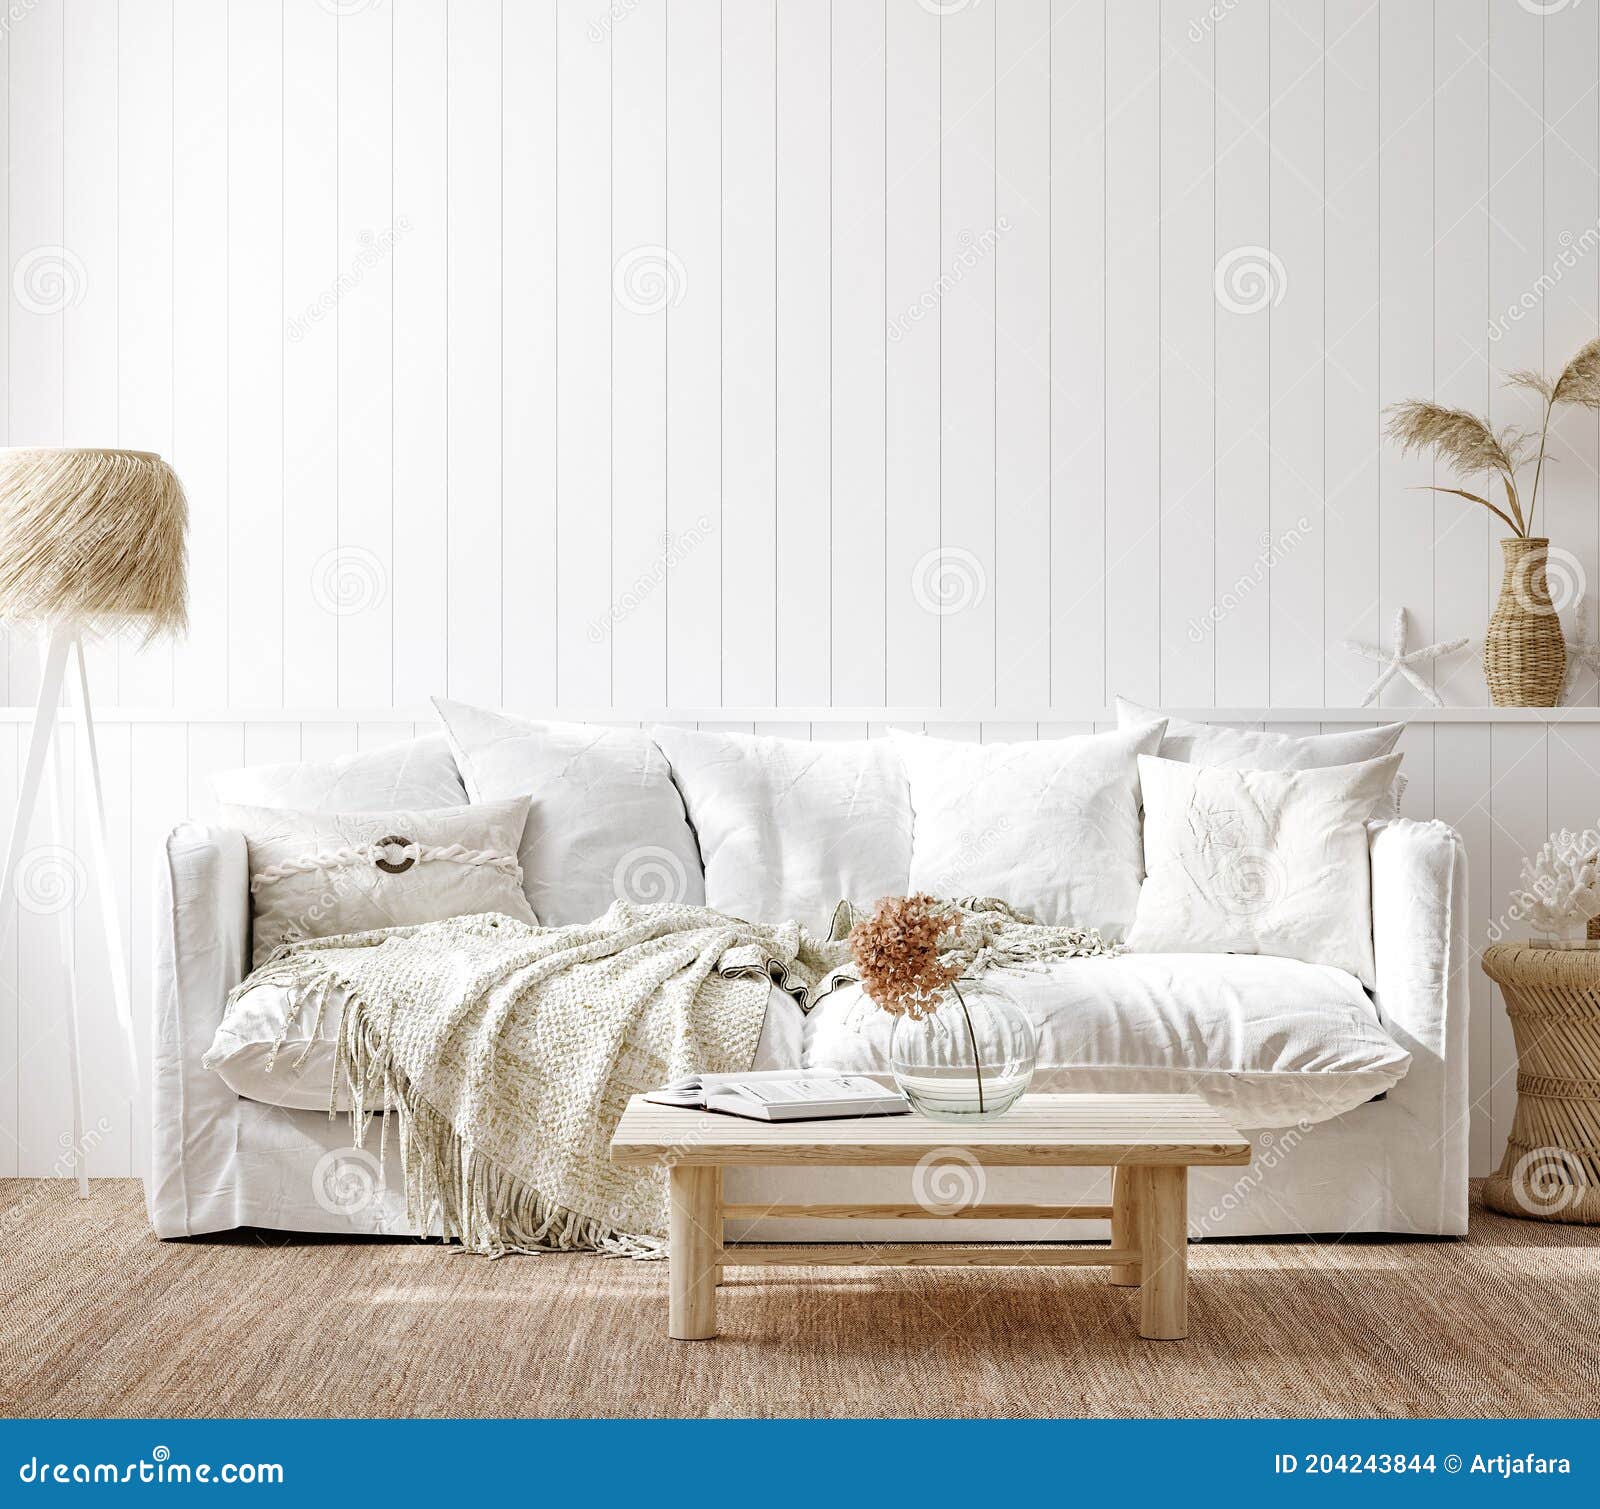 cozy home interior background, coastal style living room